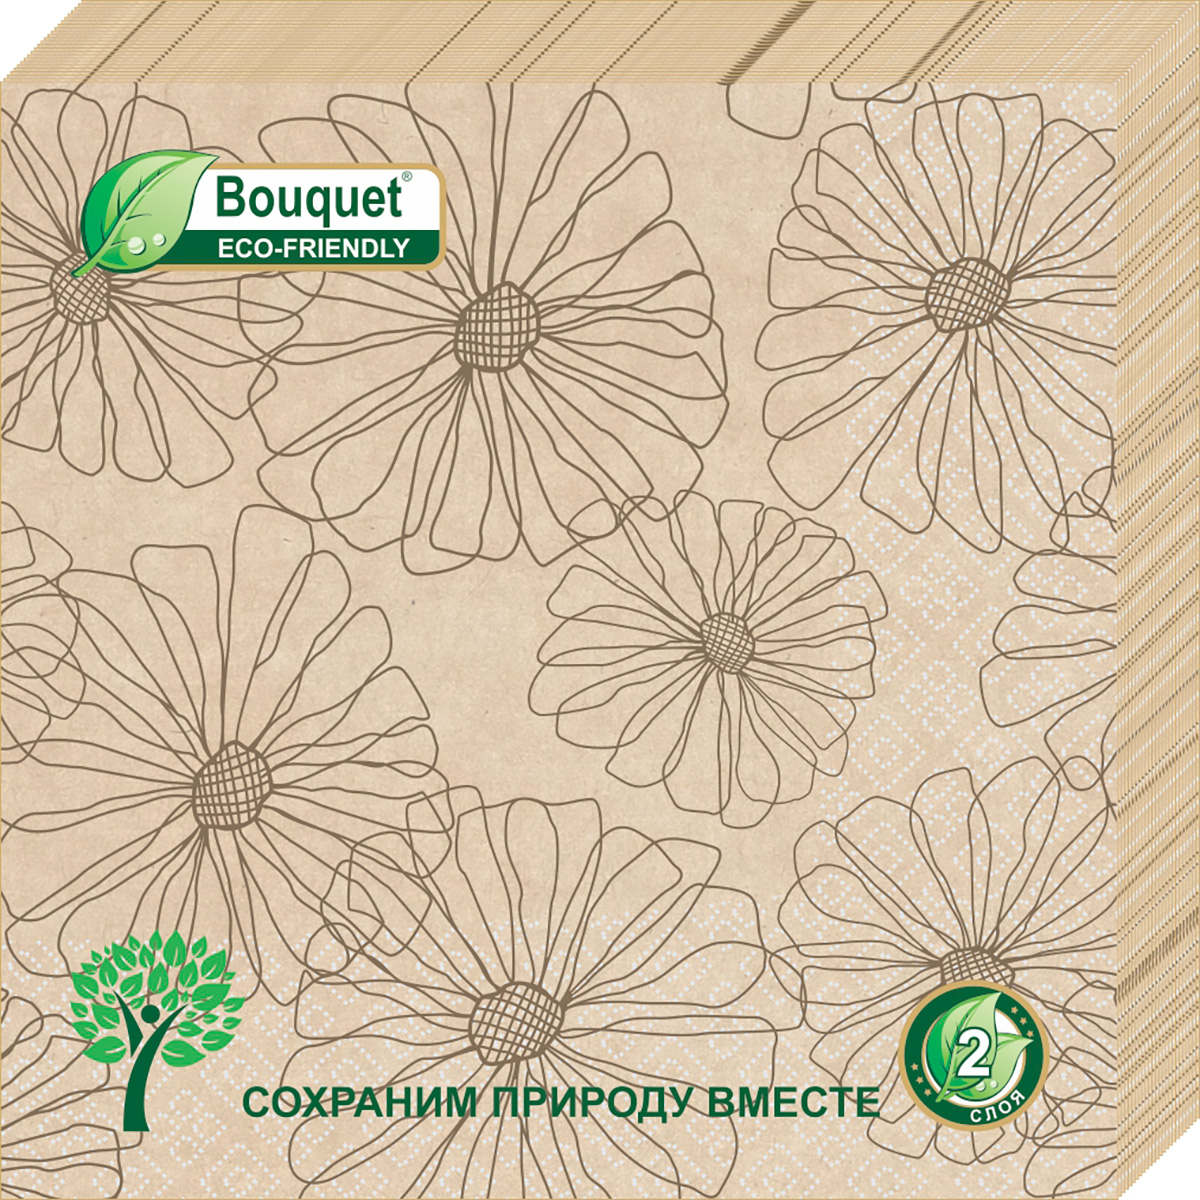 Салфетки Bouquet eco-friendly бумажные крафтовые ромашки 33х33 2сл 25л салфетки бумажные bouquet eco friendly крафт 2 слоя 25 листов